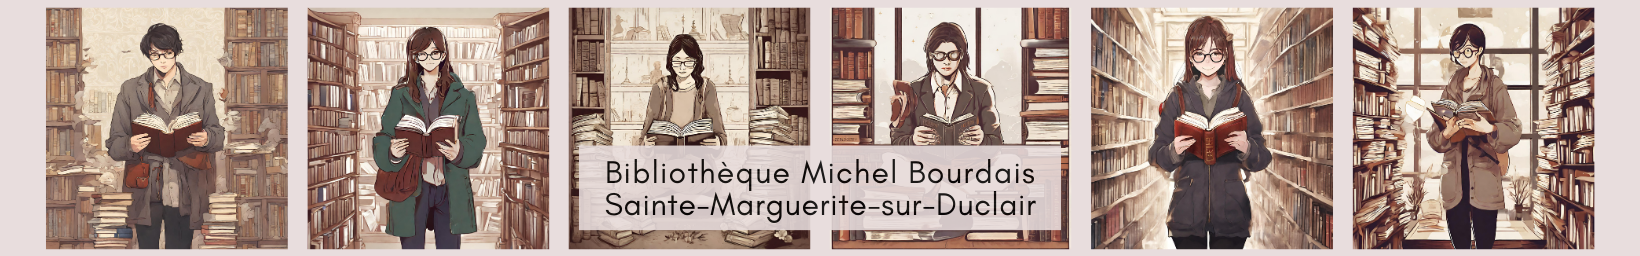 http://mabib.fr/bibliotheque-michel-bourdais/index/index/id_profil/1